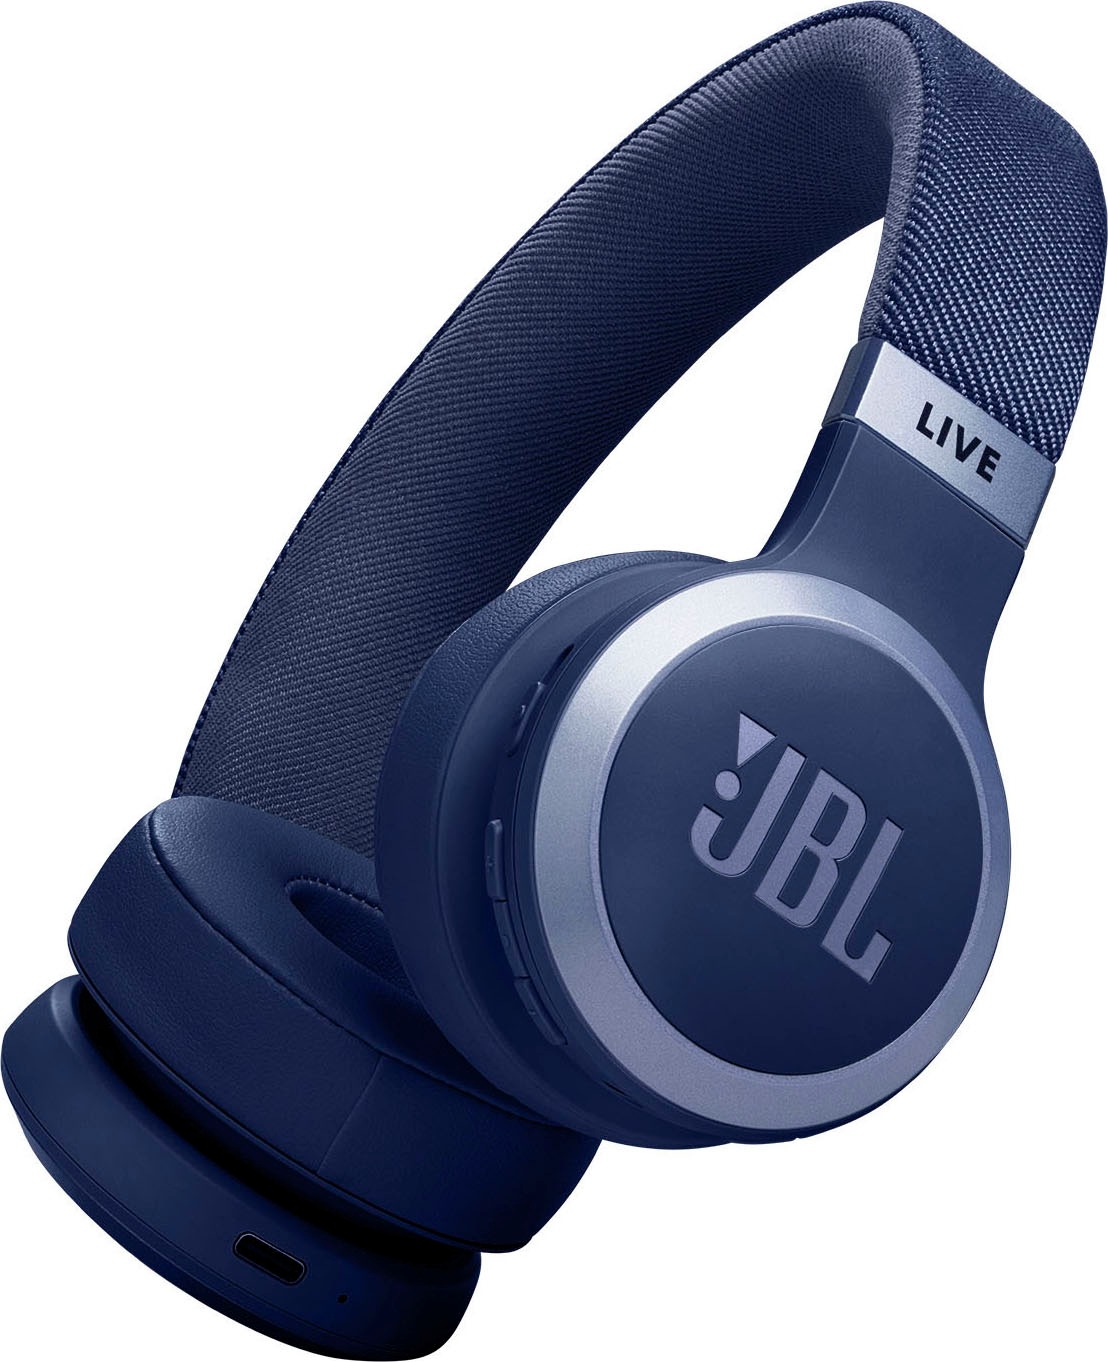 »LIVE OTTO jetzt 670NC« Online im Kopfhörer Shop JBL